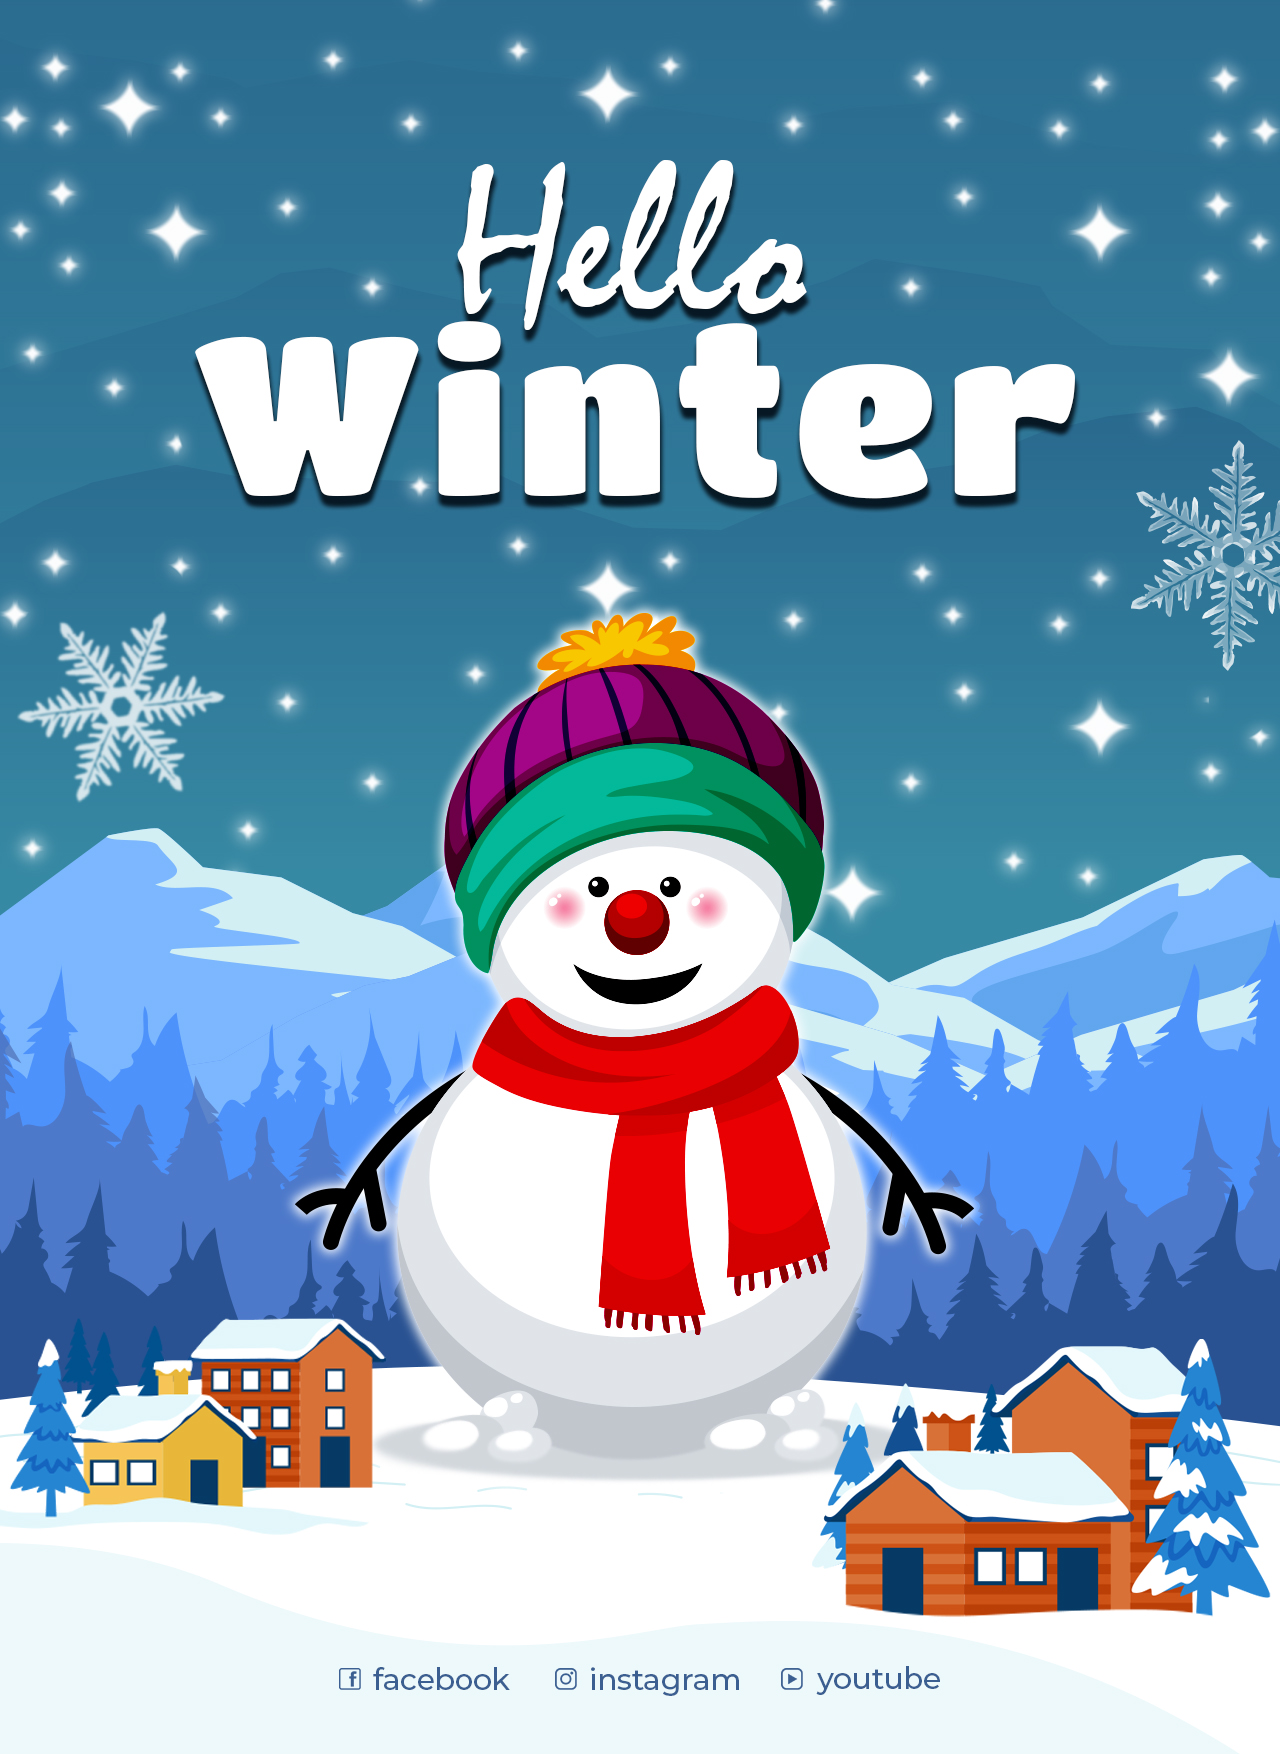 Winter holidays poster